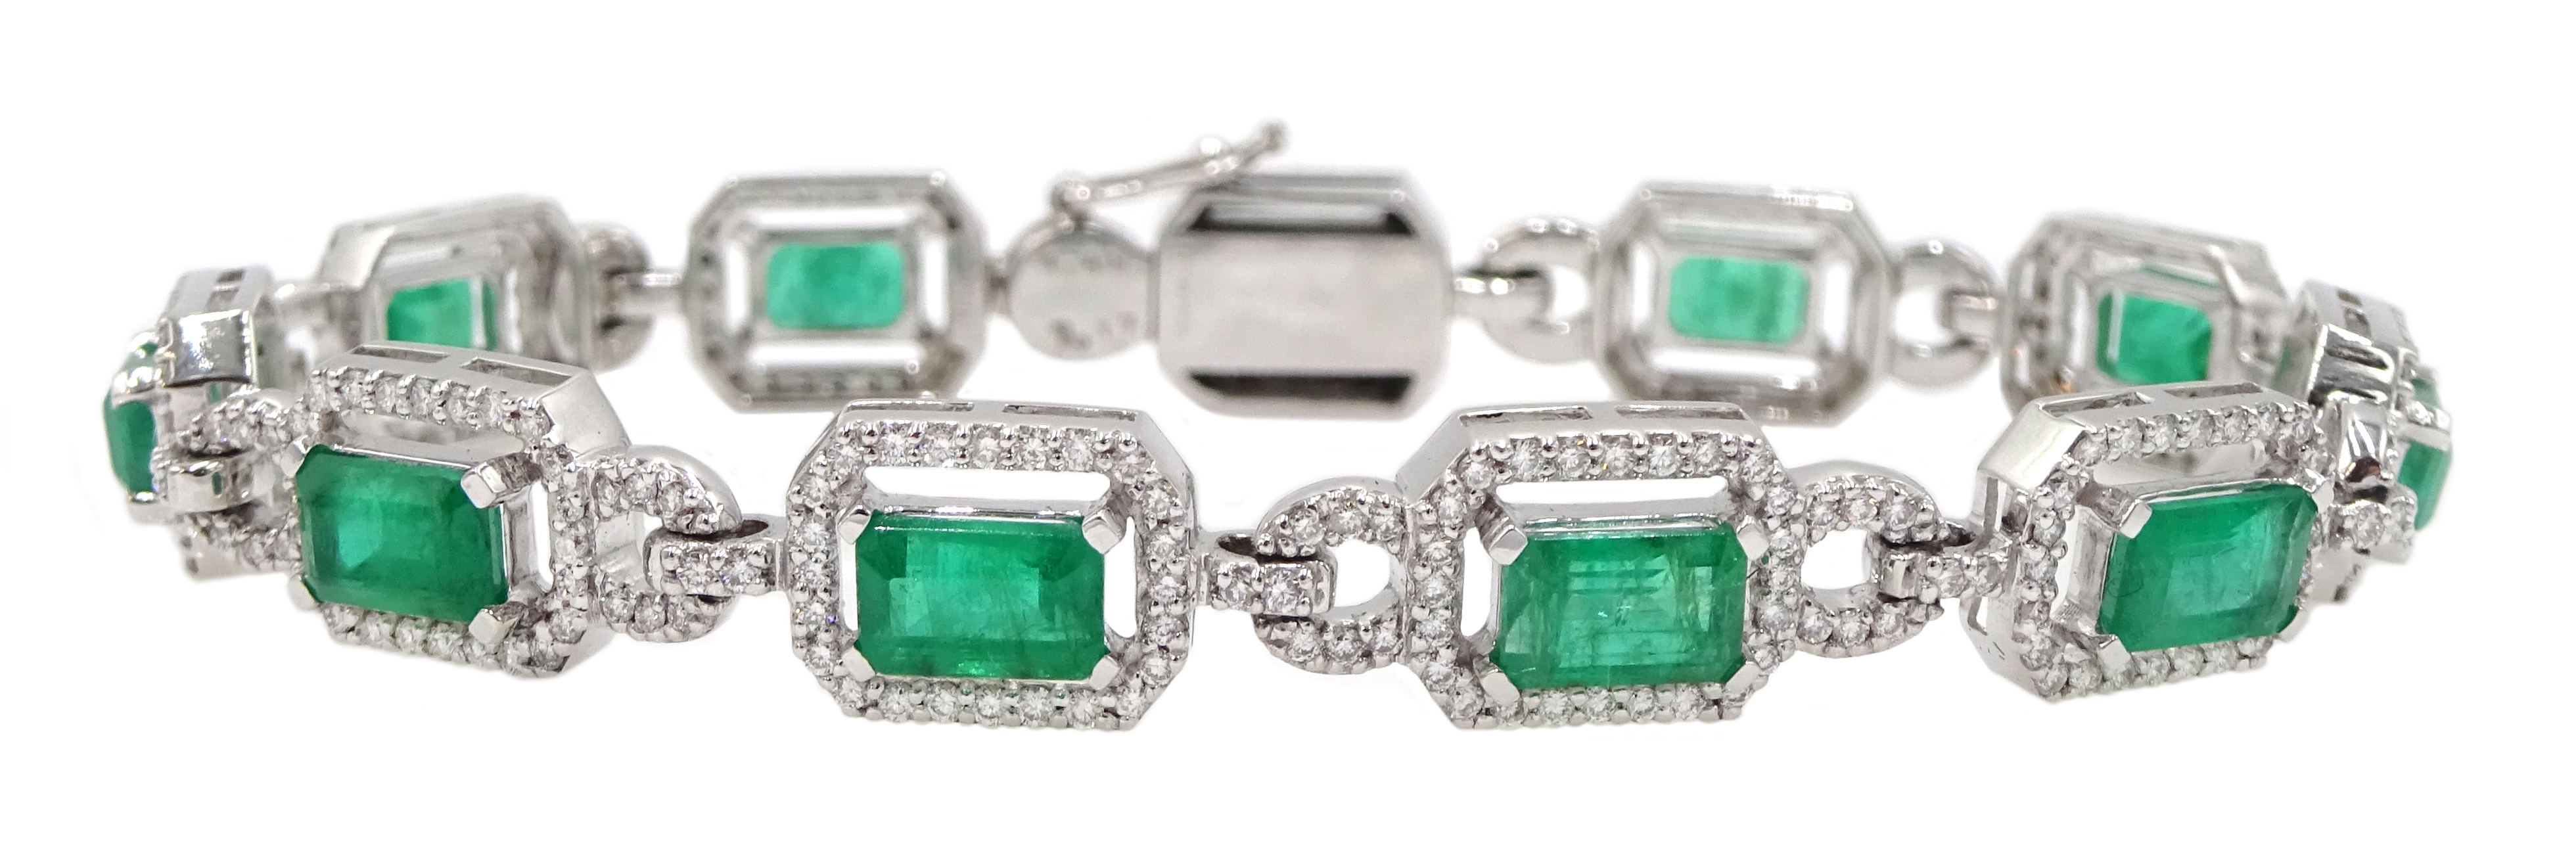 18ct white gold emerald cut emerald and round brilliant cut diamond bracelet, hallmarked, emerald t